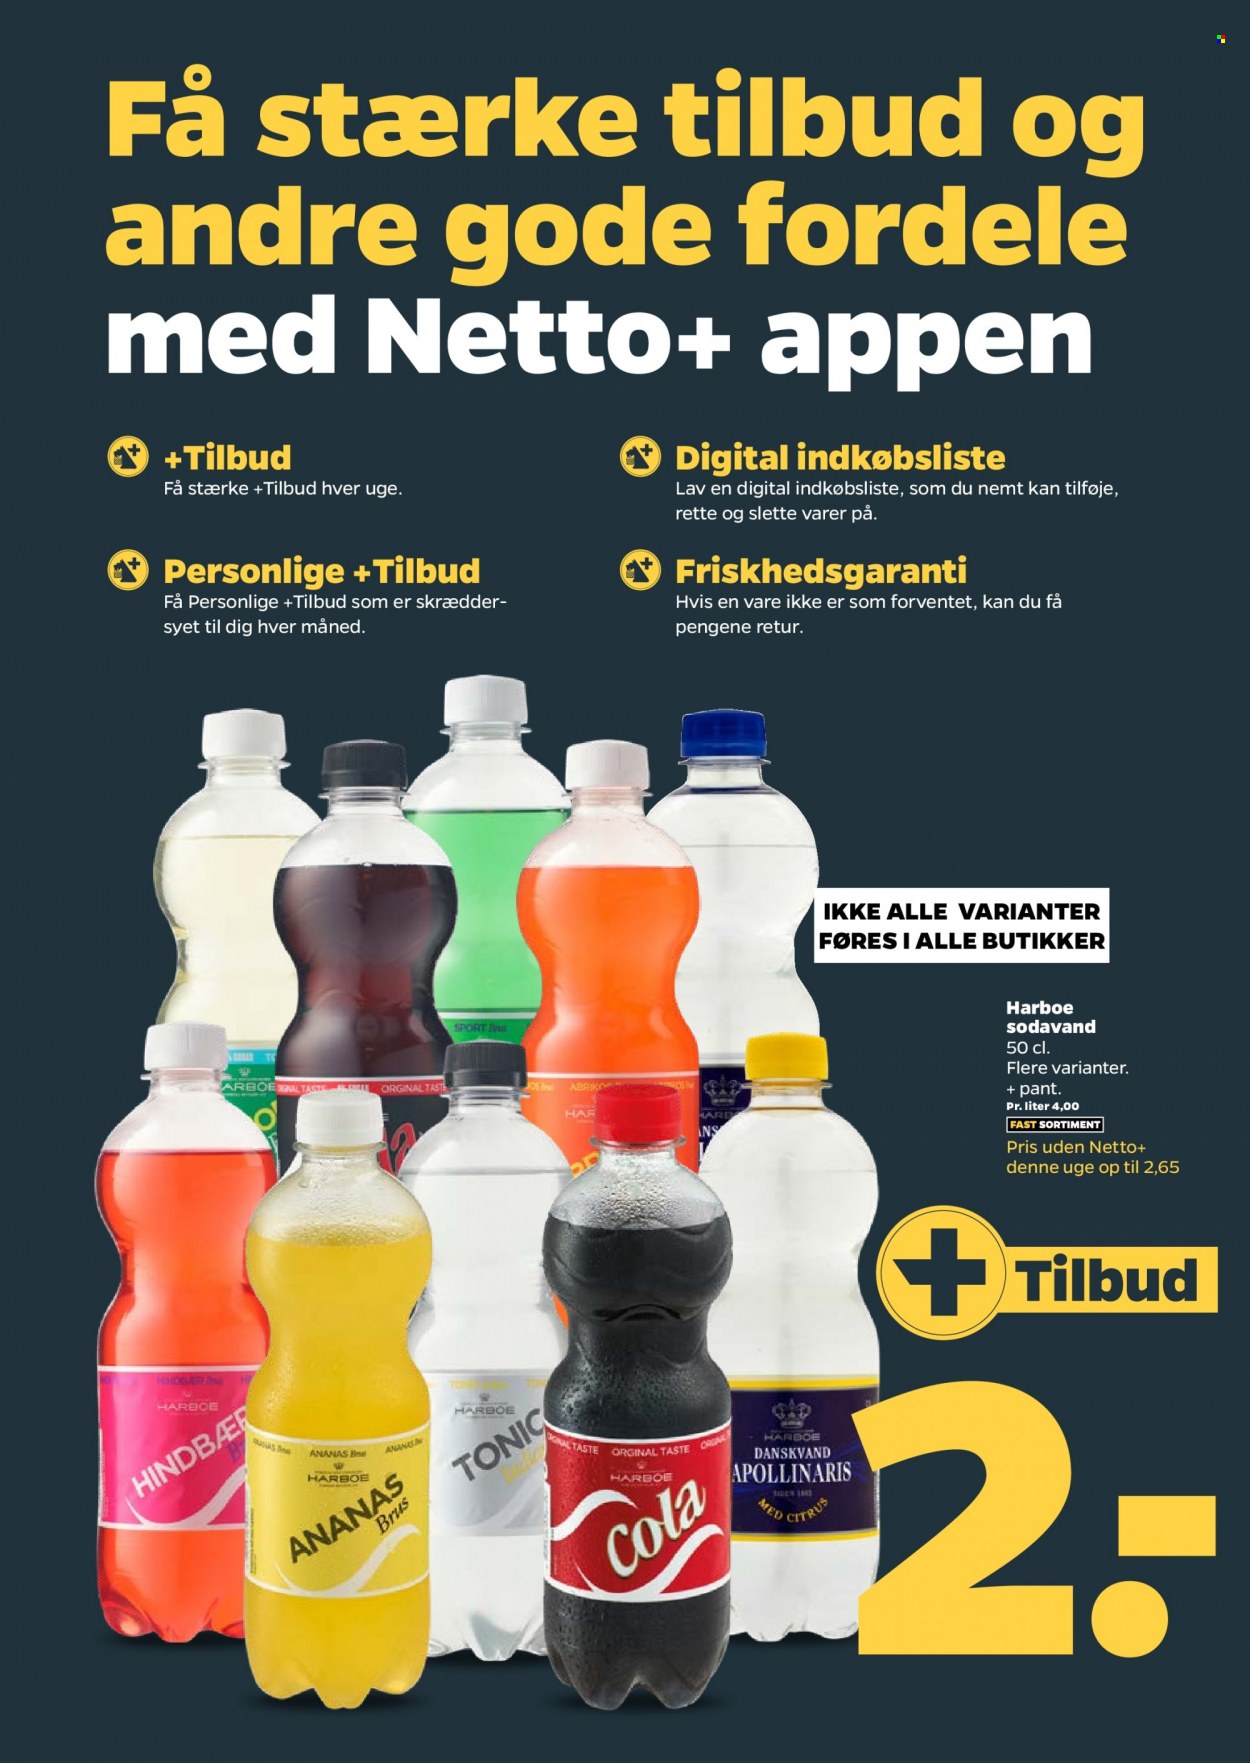 thumbnail - Netto tilbud  - 11.9.2021 - 17.9.2021 - tilbudsprodukter - hindbær, Coca-Cola, sodavand, tonic. Side 3.